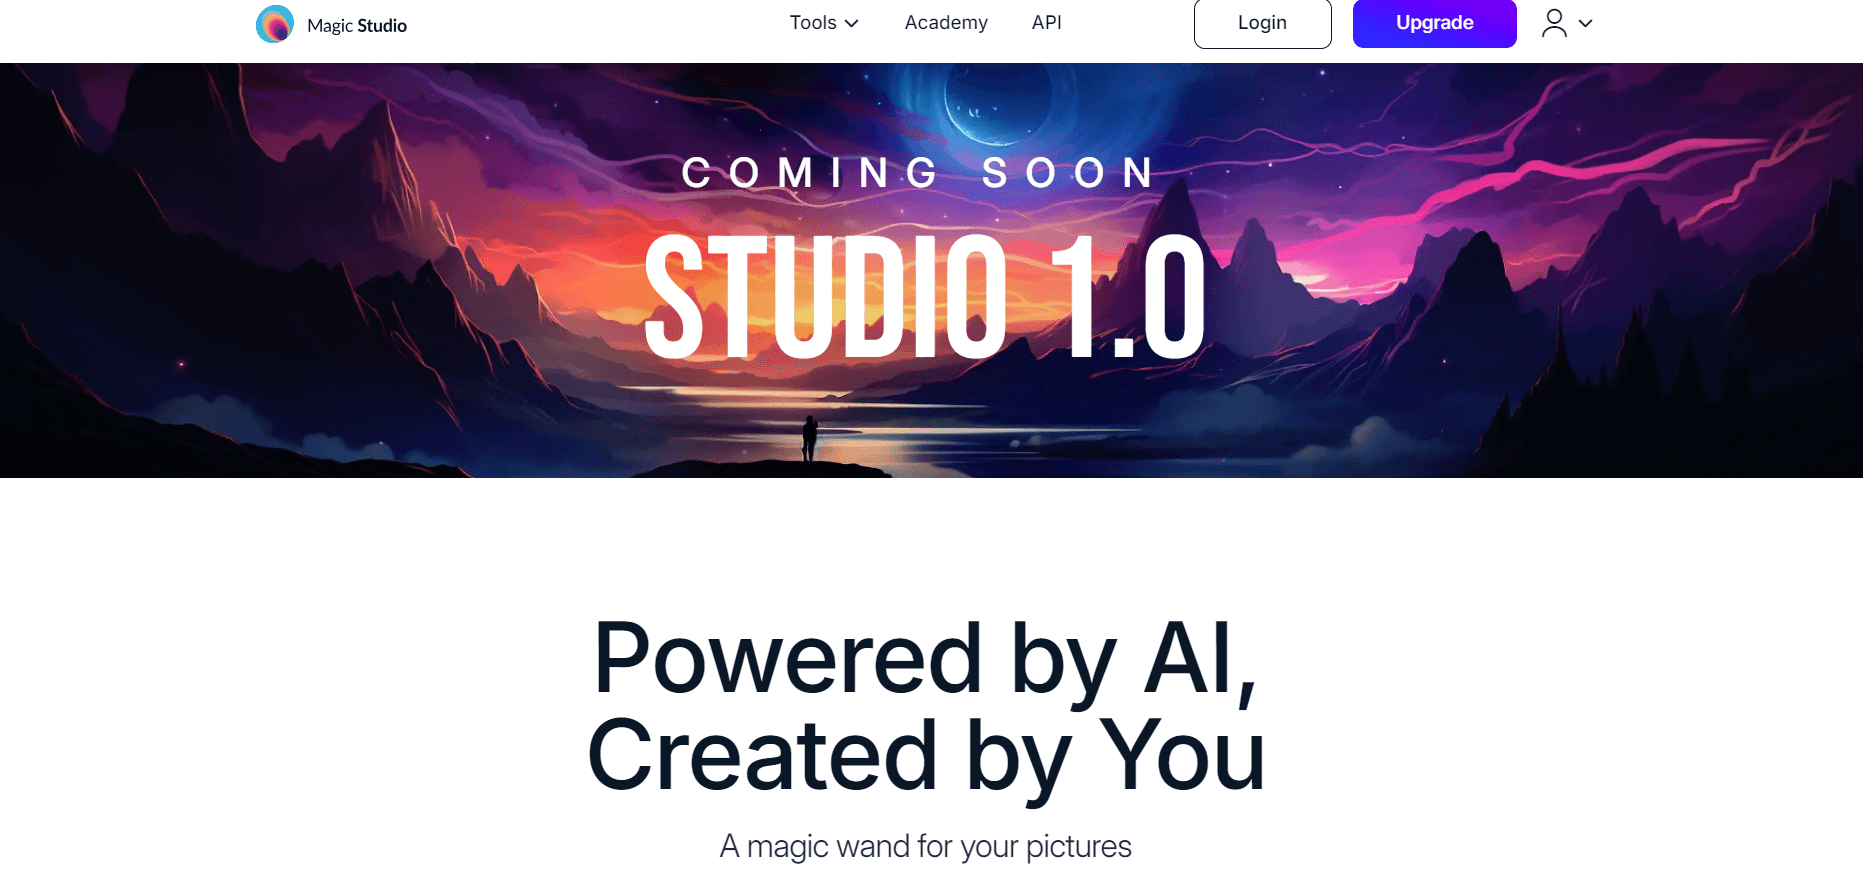 Magic Studio - AI Image Generator and Editor in 1 Platform 